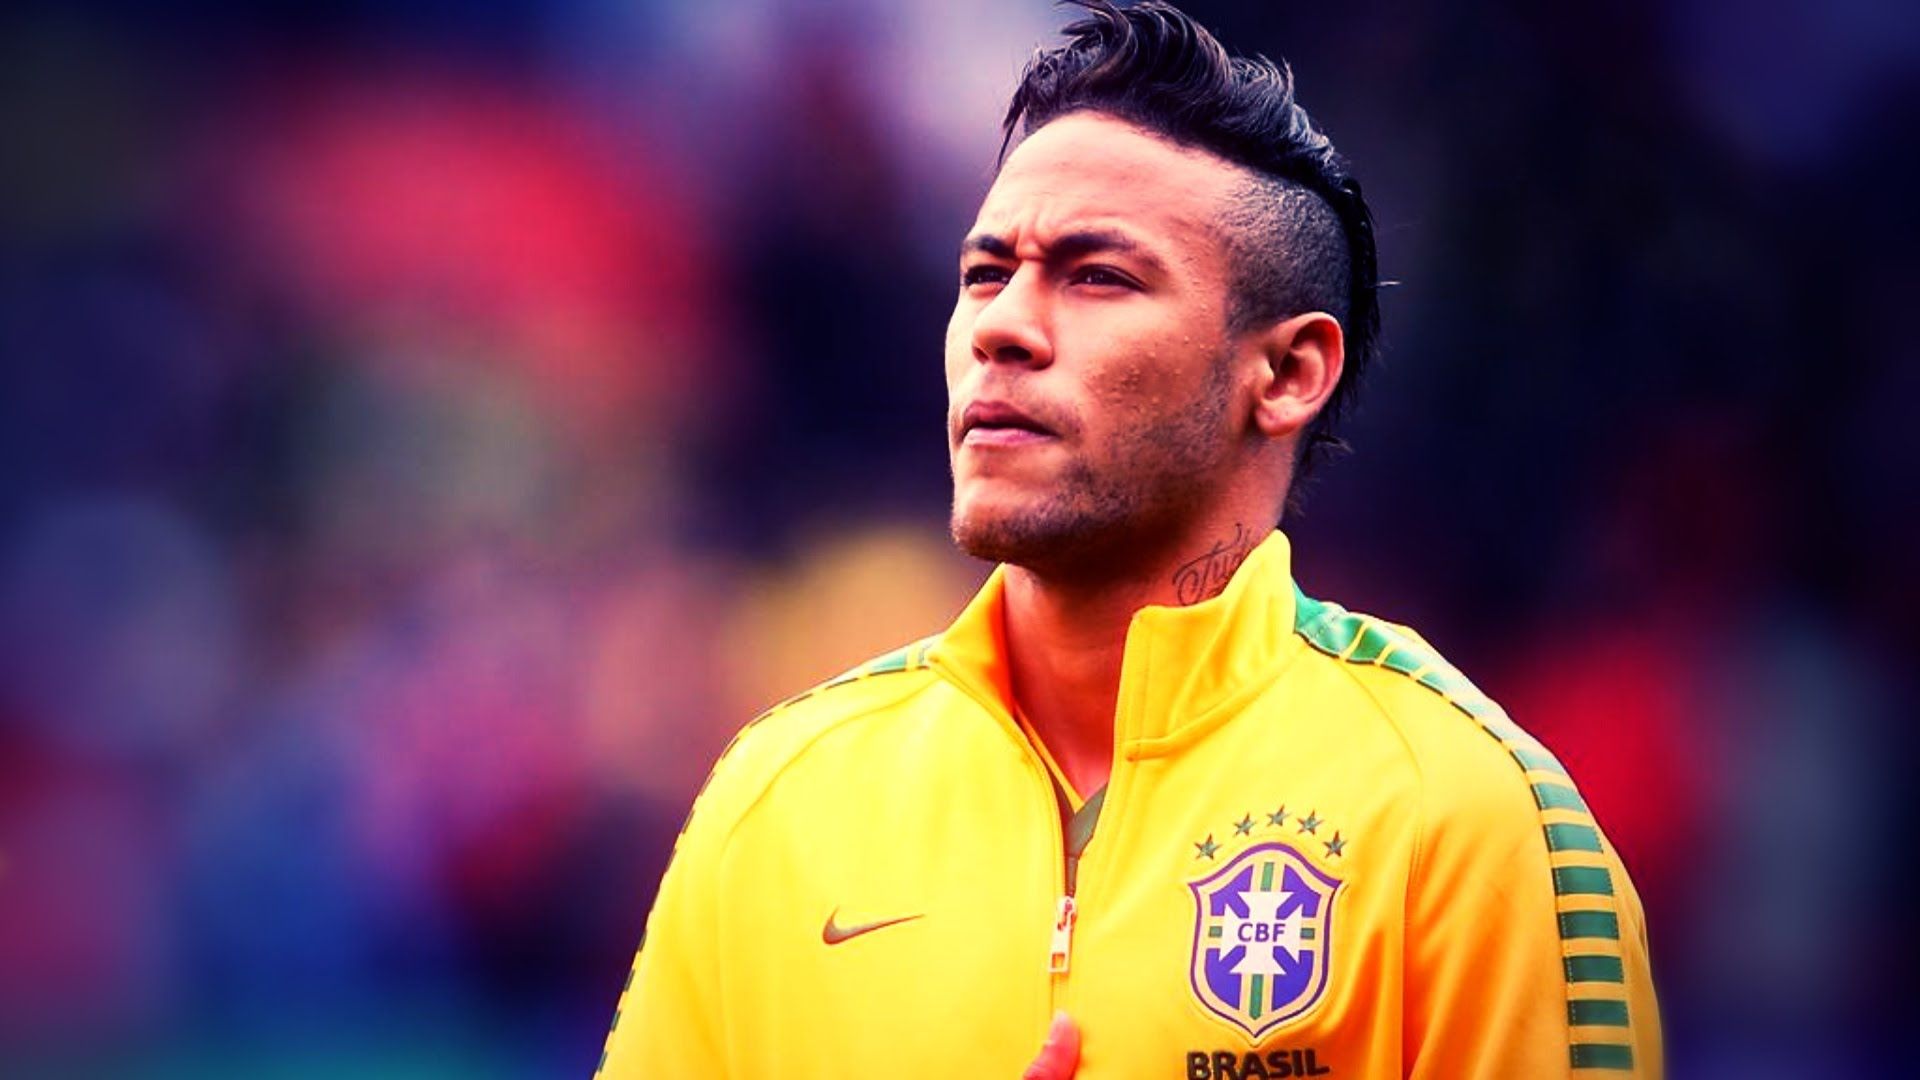 Neymar Jr Football Soccer Player Free Hd Best Photo Mobile Desktop Bakground Download Wallpaper Photos